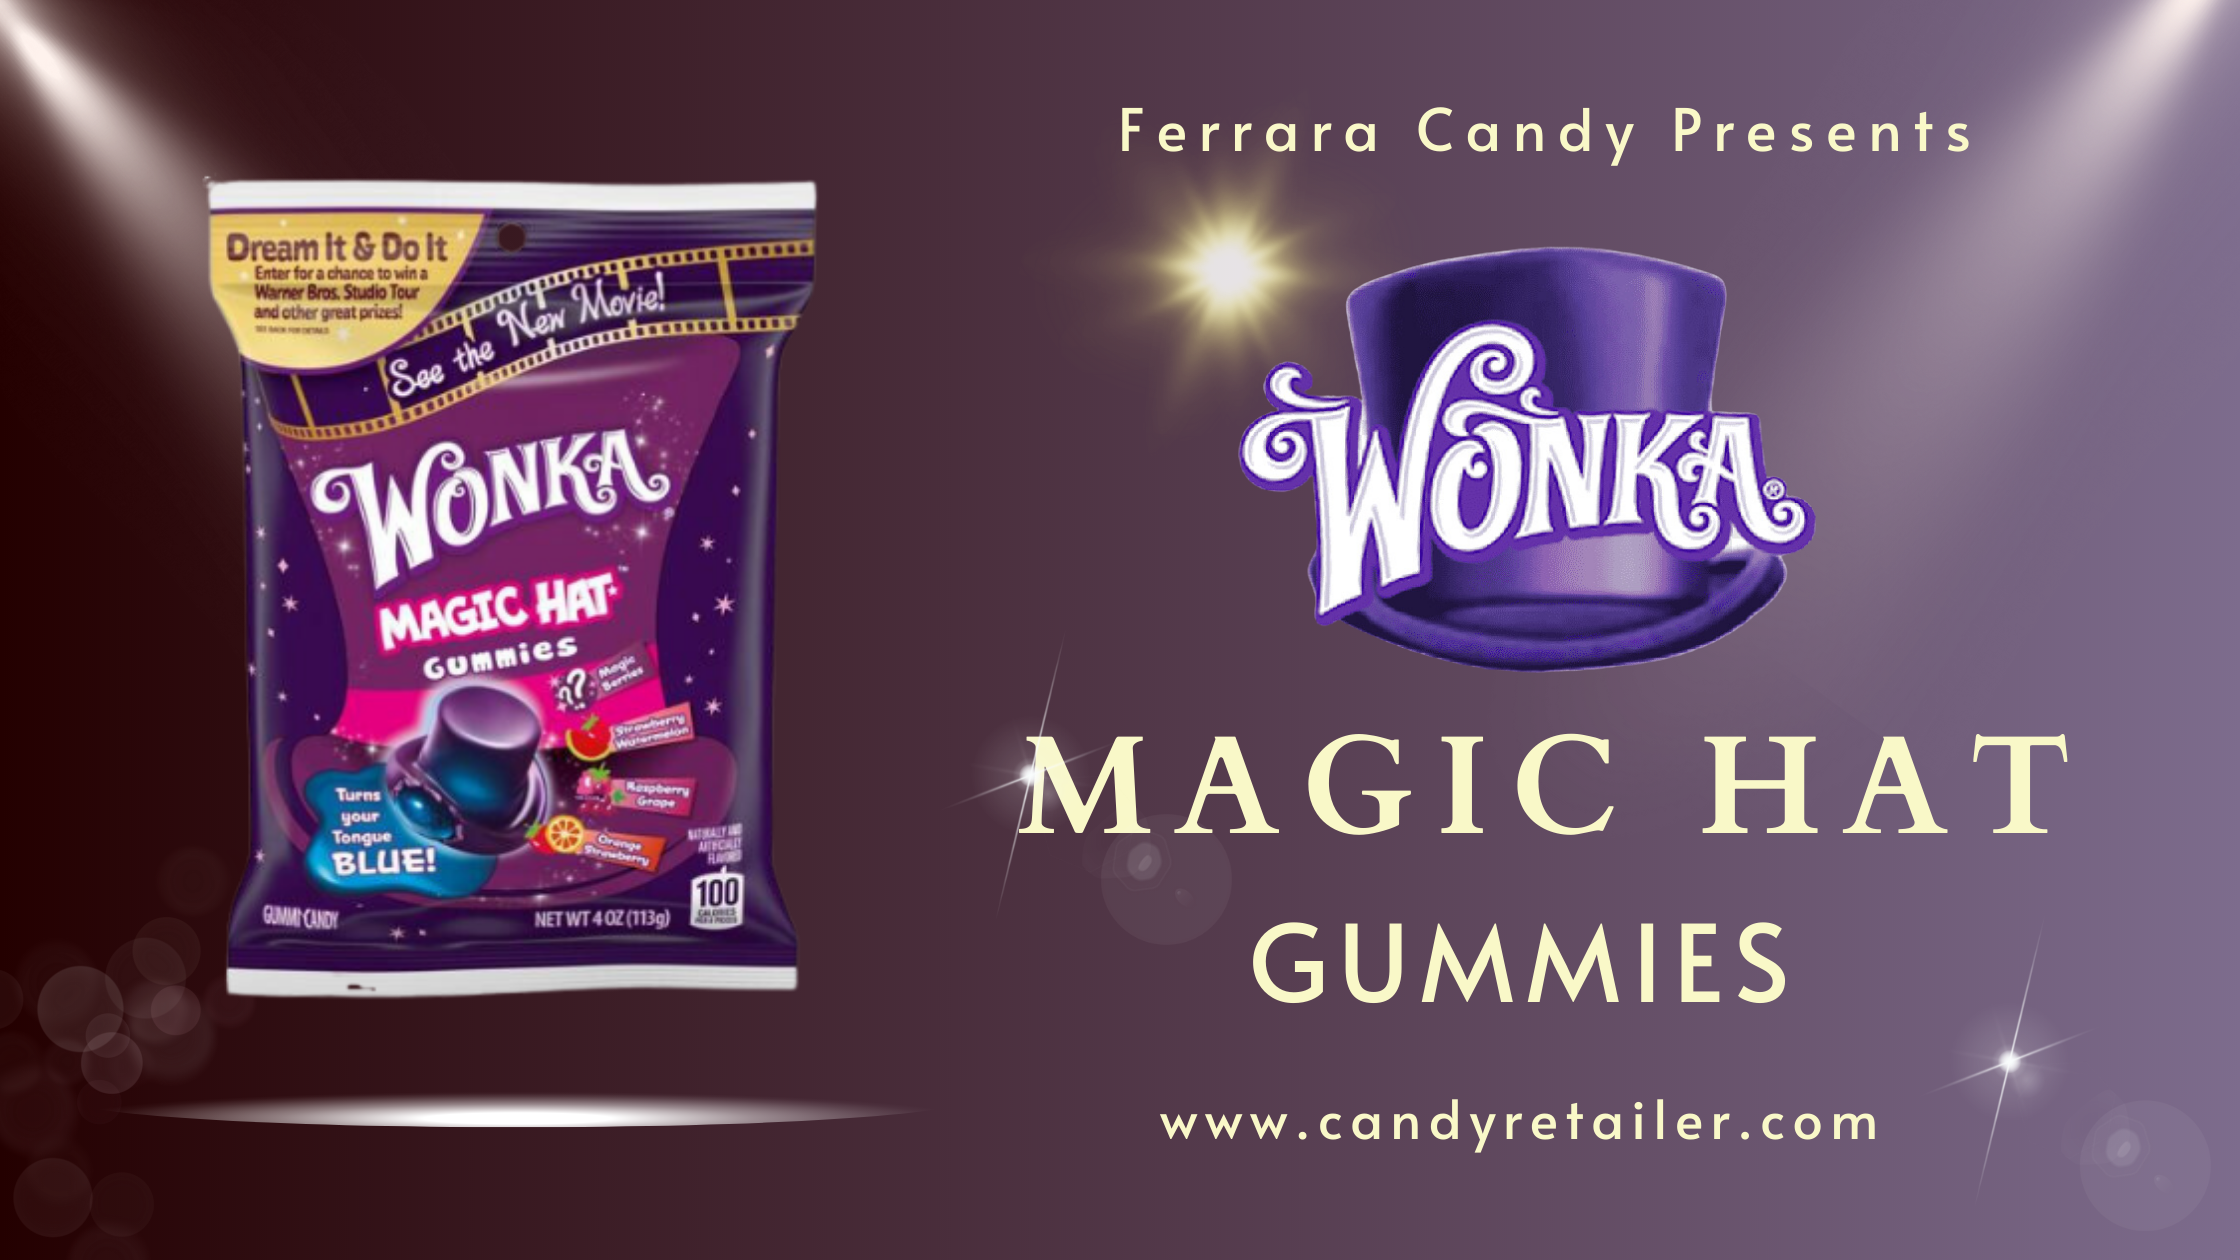 Ferrara Candy Revamps Wonka Brand with New Magic Hat Gummies